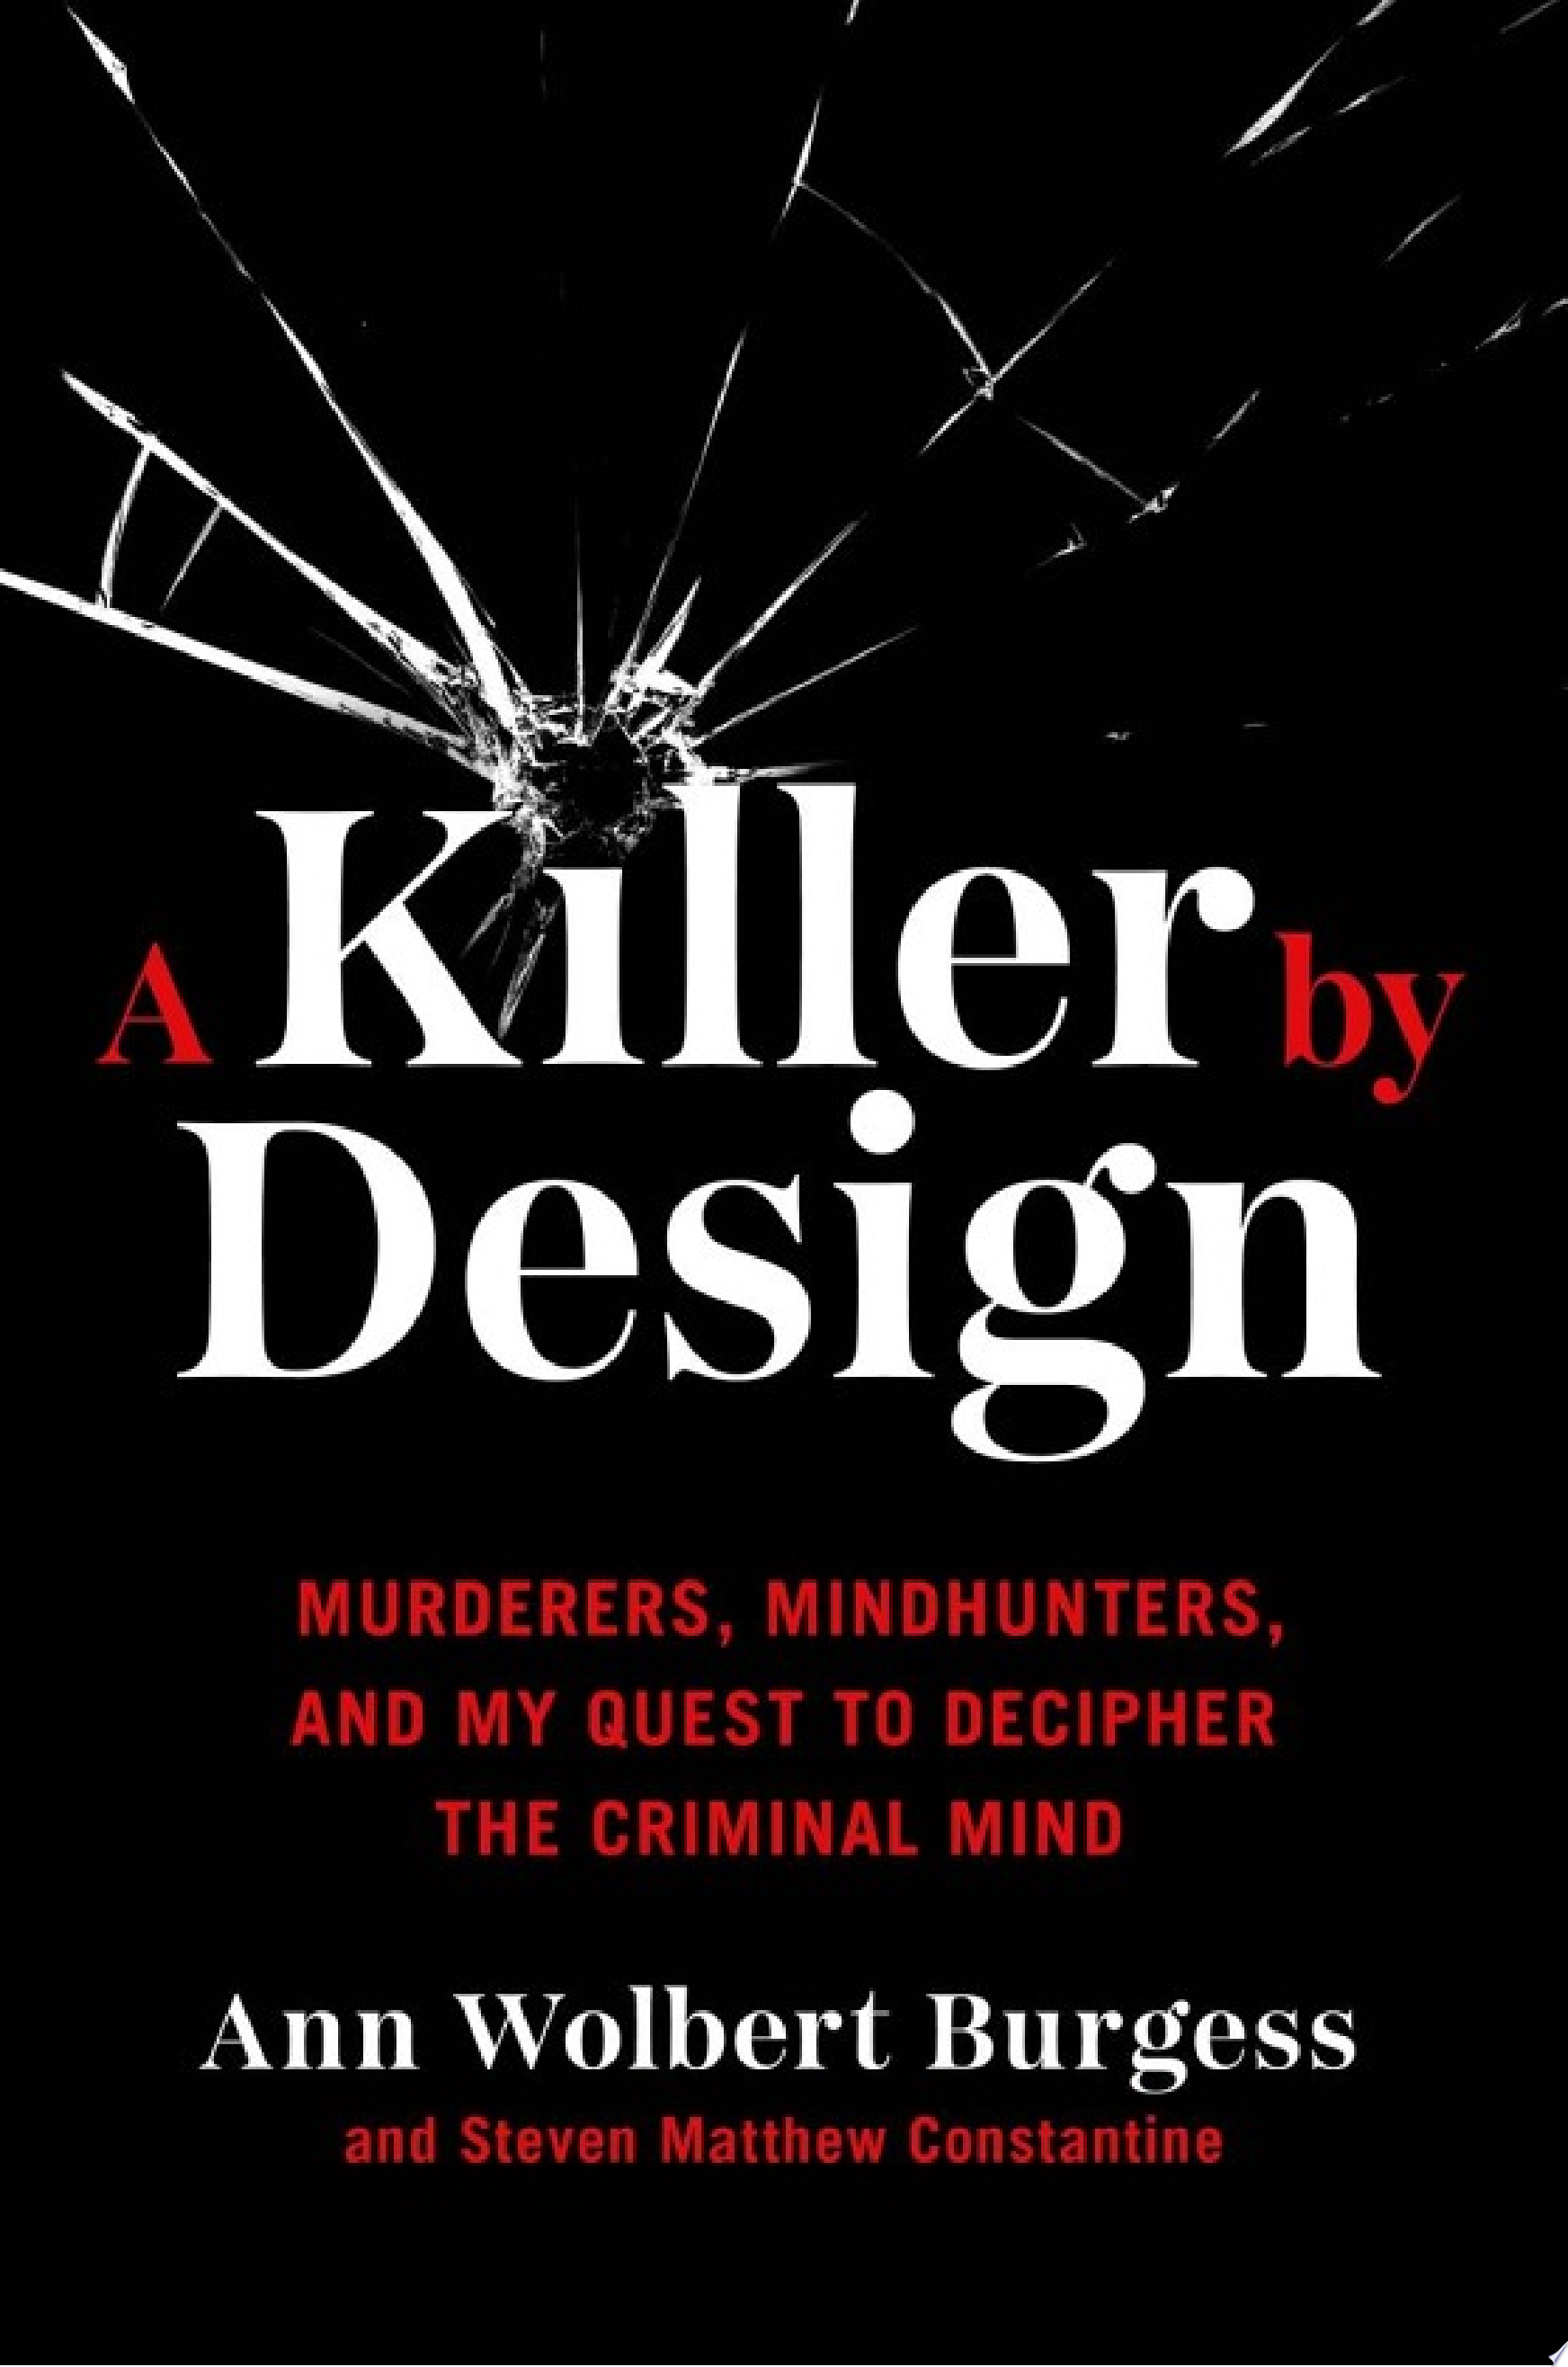 Image for "A Killer by Design"